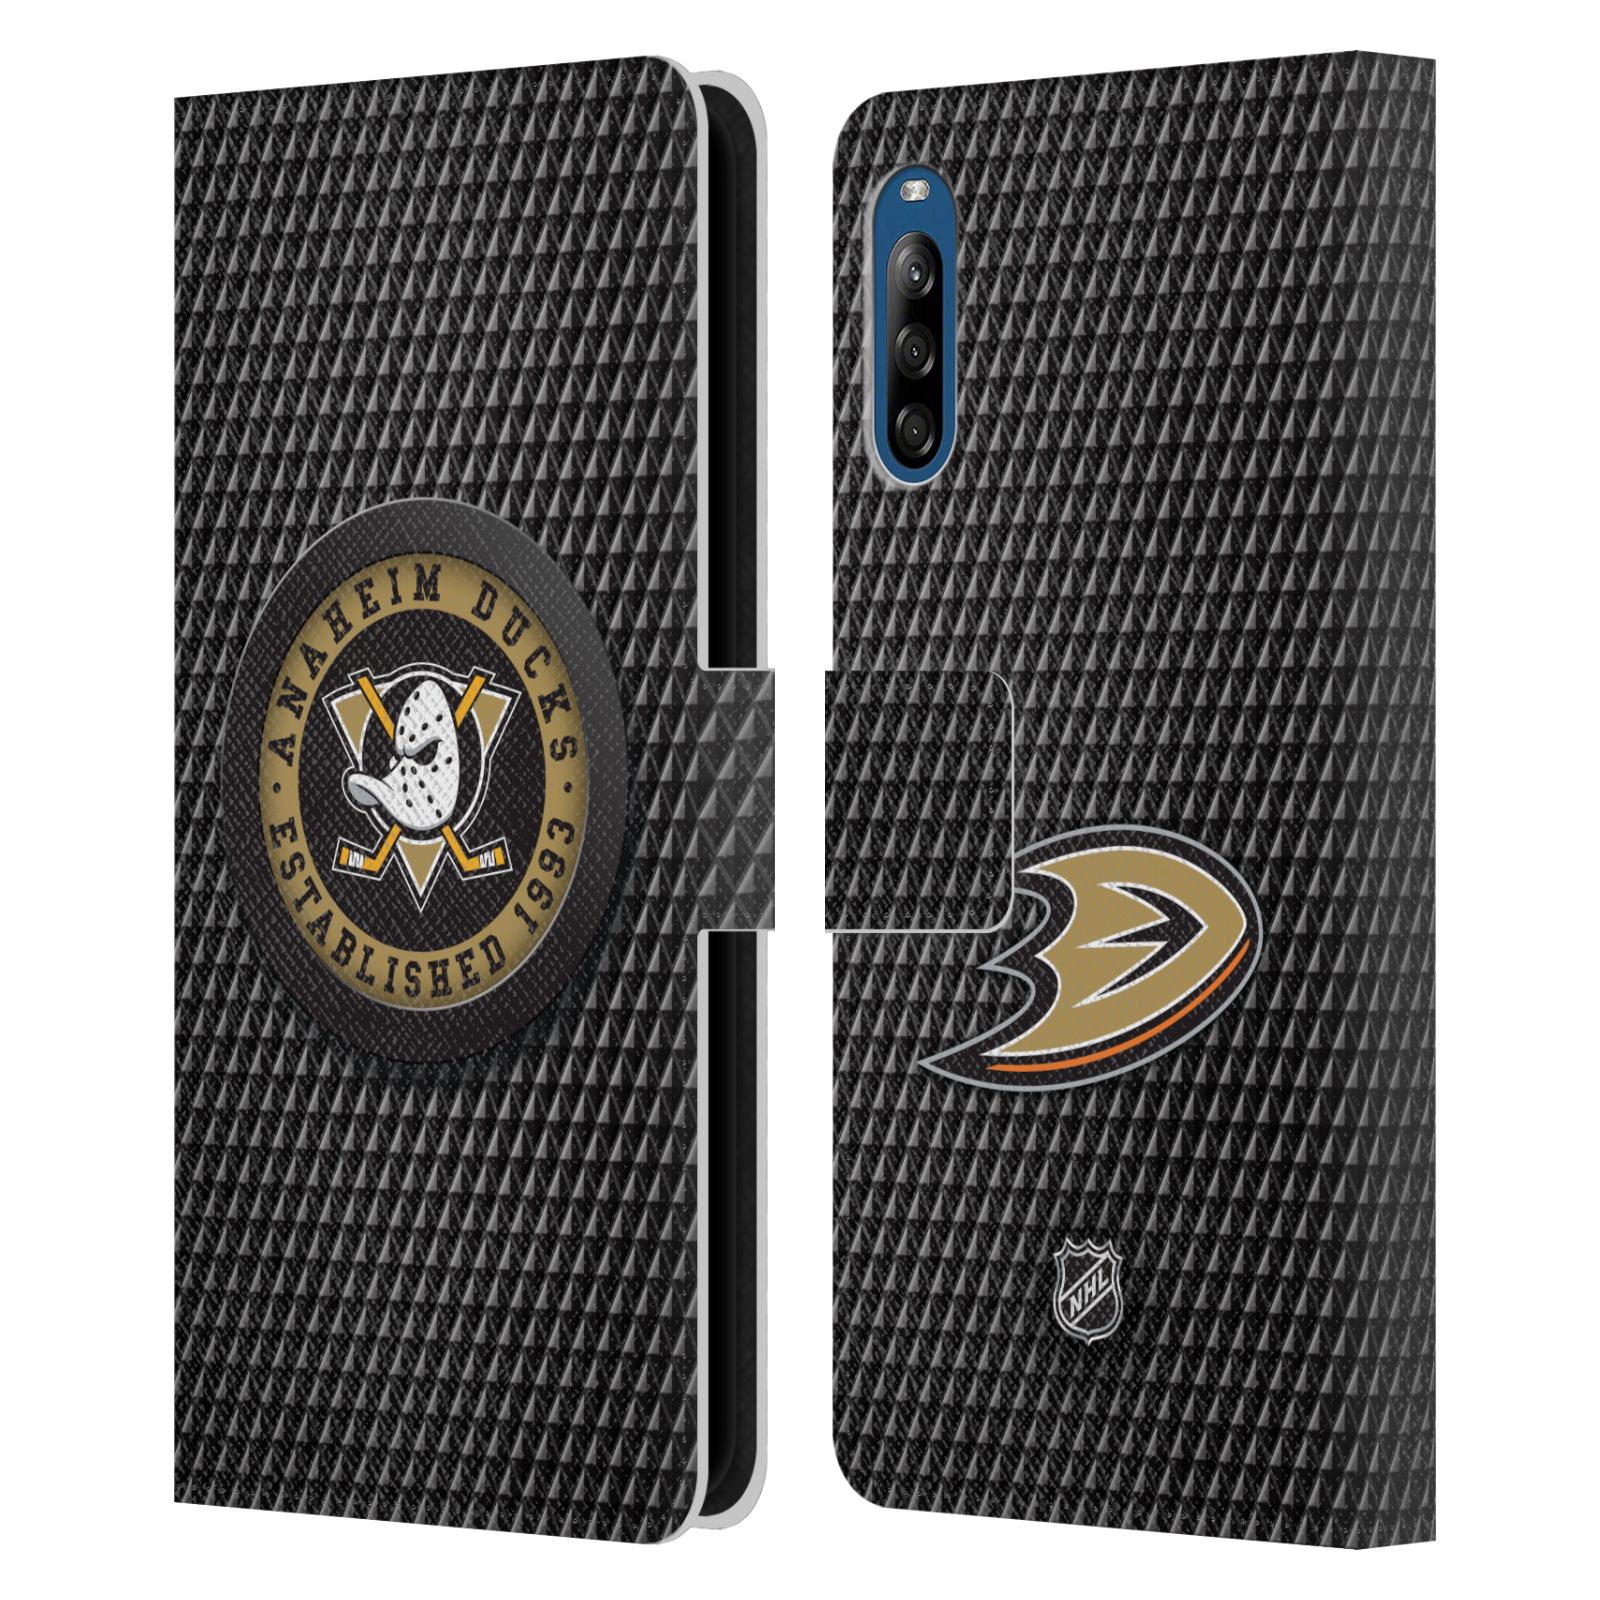 Pouzdro pro mobil Sony Xperia L4 - HEAD CASE - NHL - Anaheim Ducks - Puk